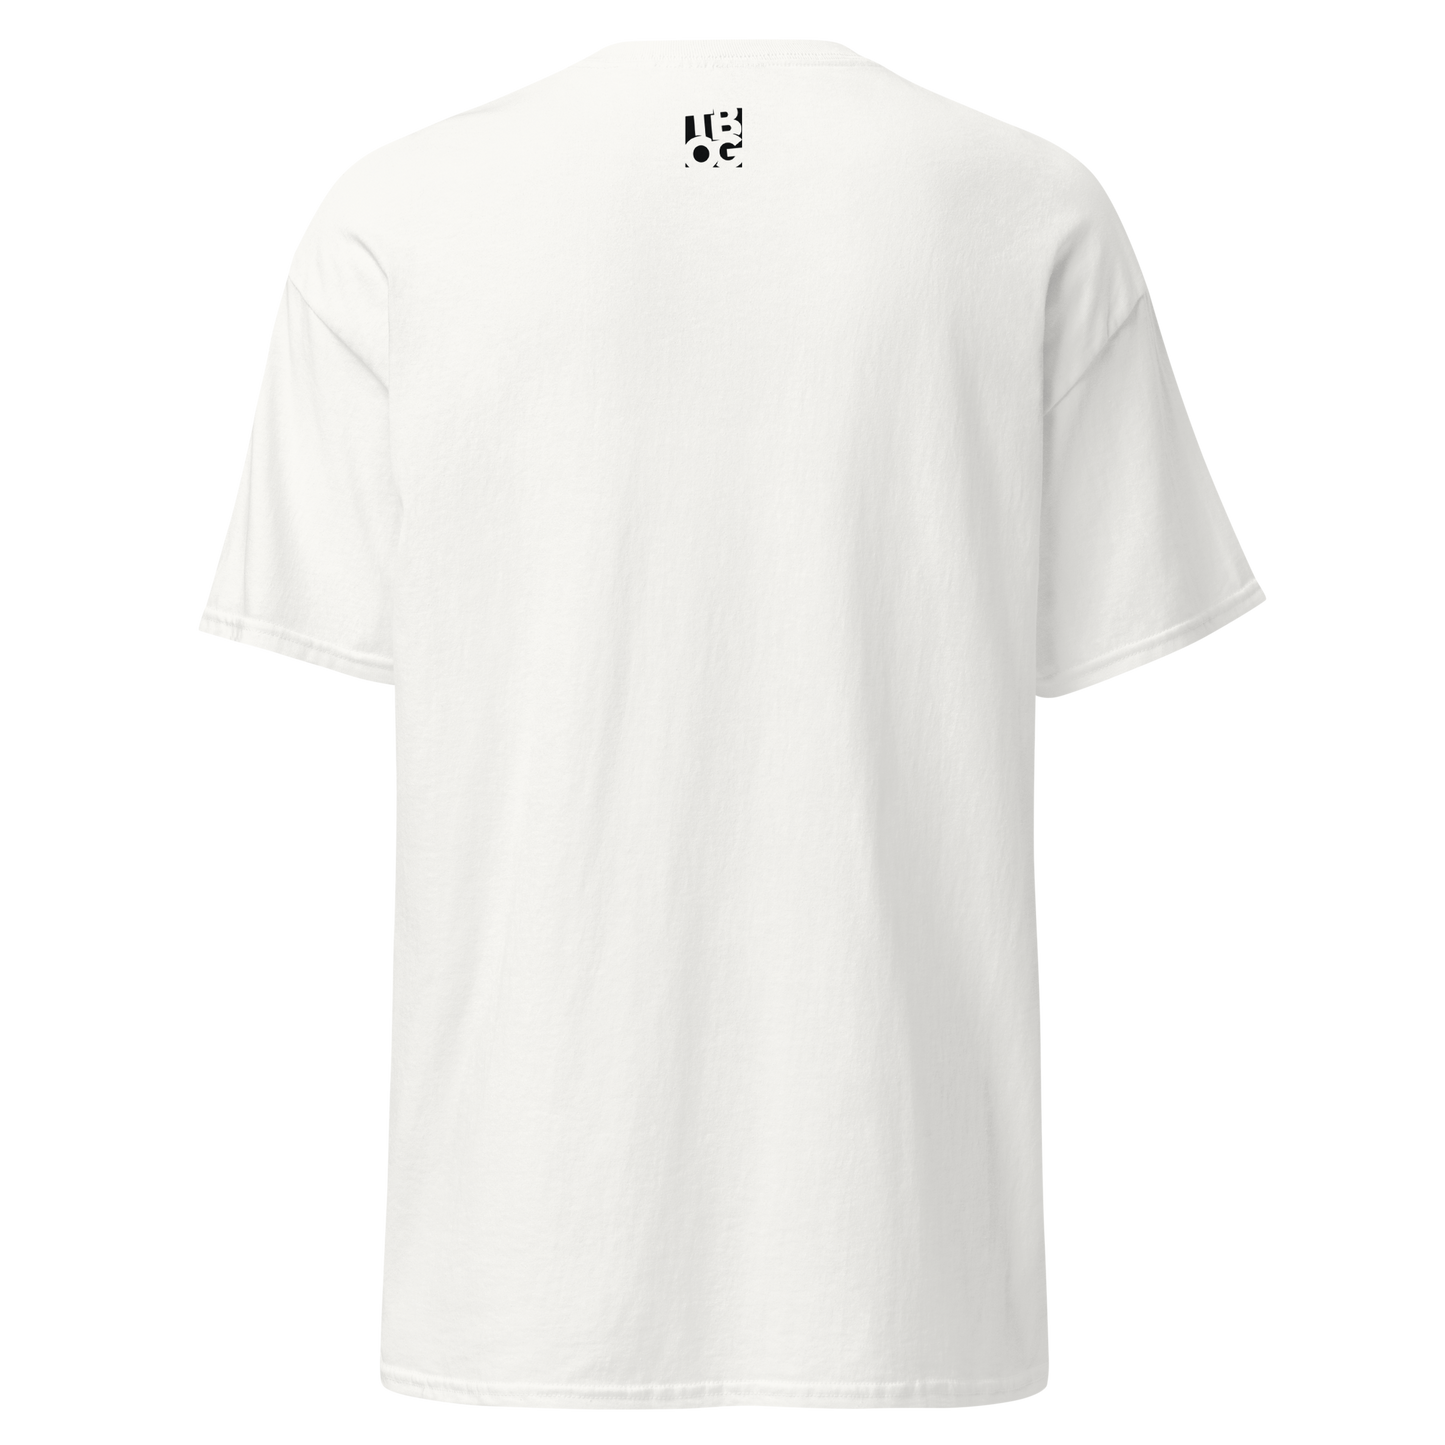 BWSFM T-Shirt(White)